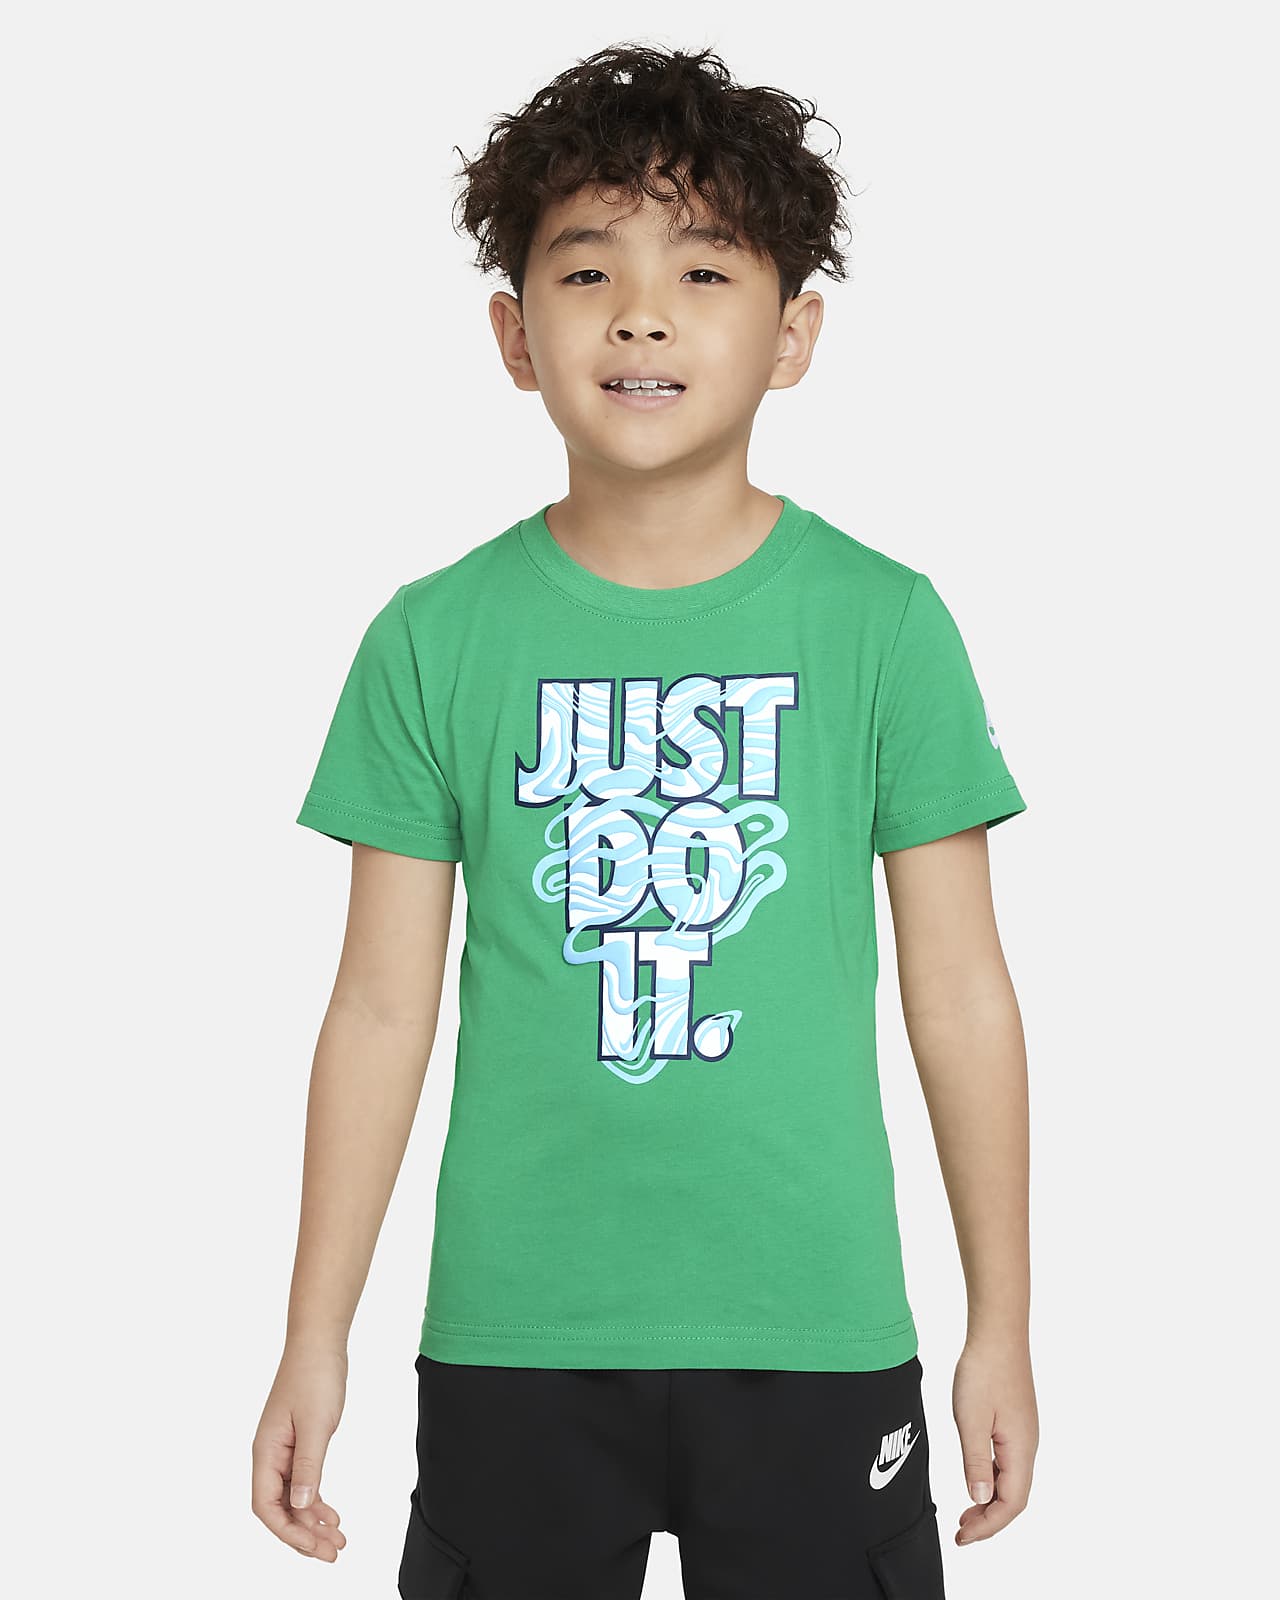 Playera estampada para niños de preescolar Nike "Just Do It"